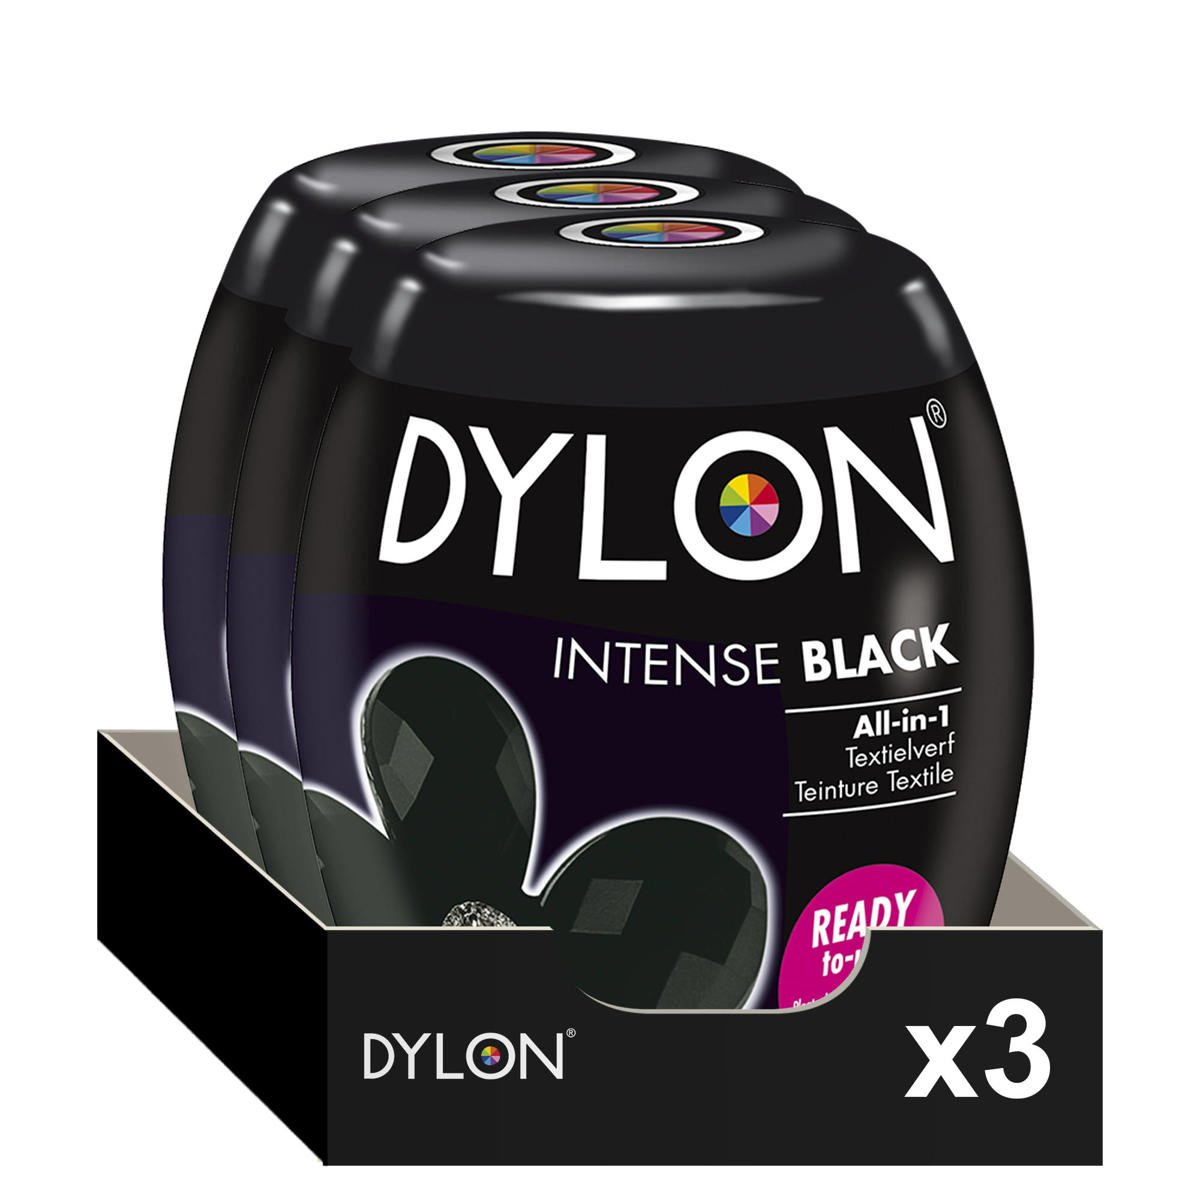 Dylon Pod - Intense Black textielverf - 3 pods - 3x 350 gram wehkamp